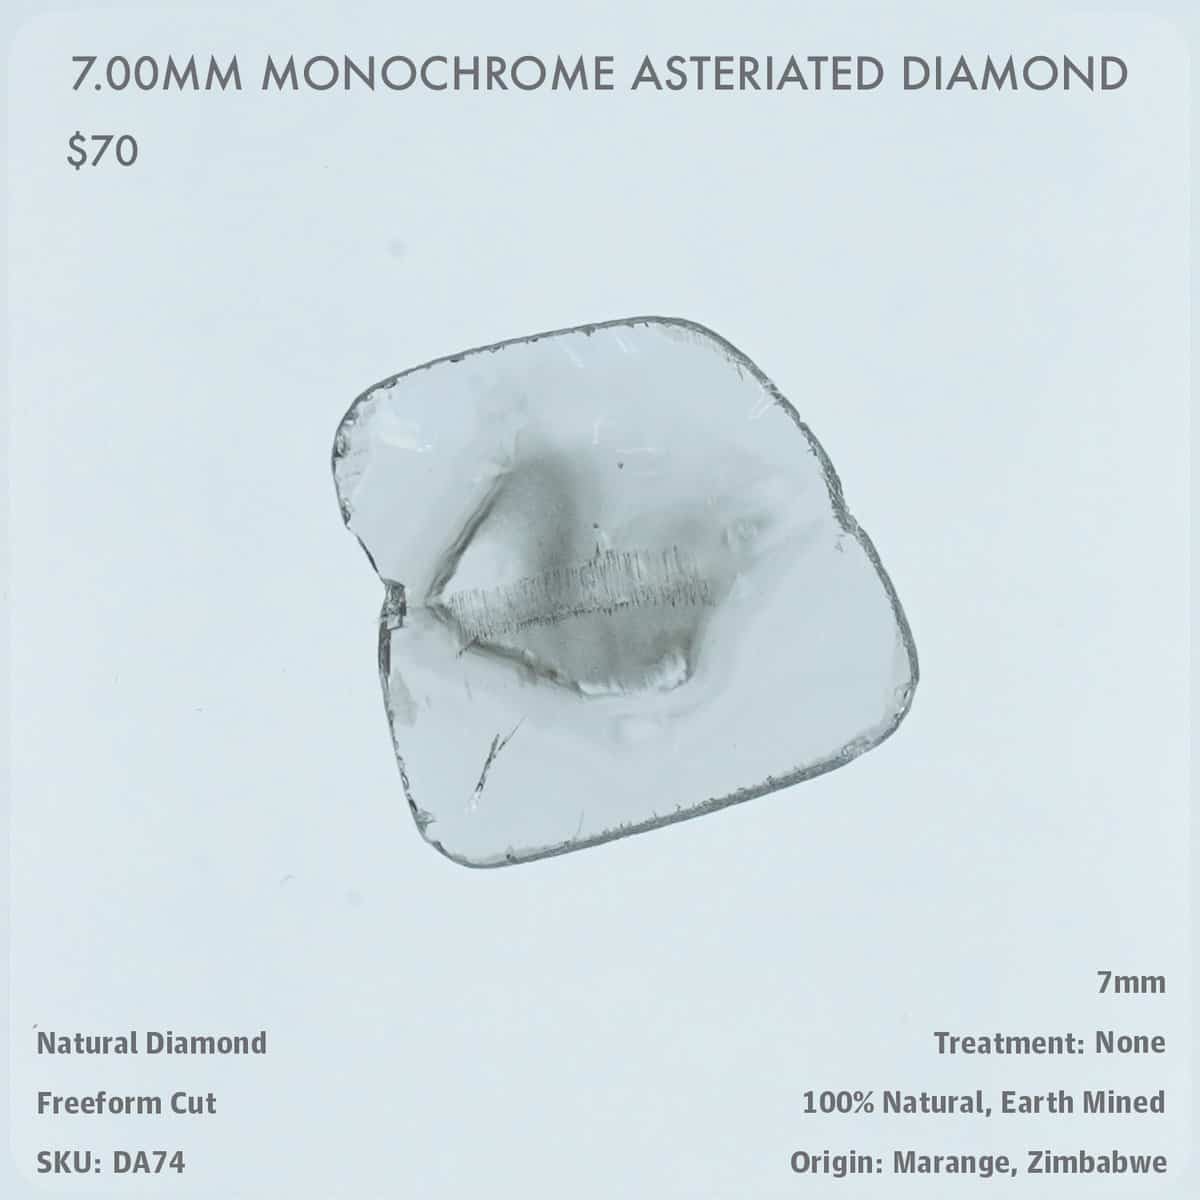 7.00mm Monochrome Asteriated Diamond